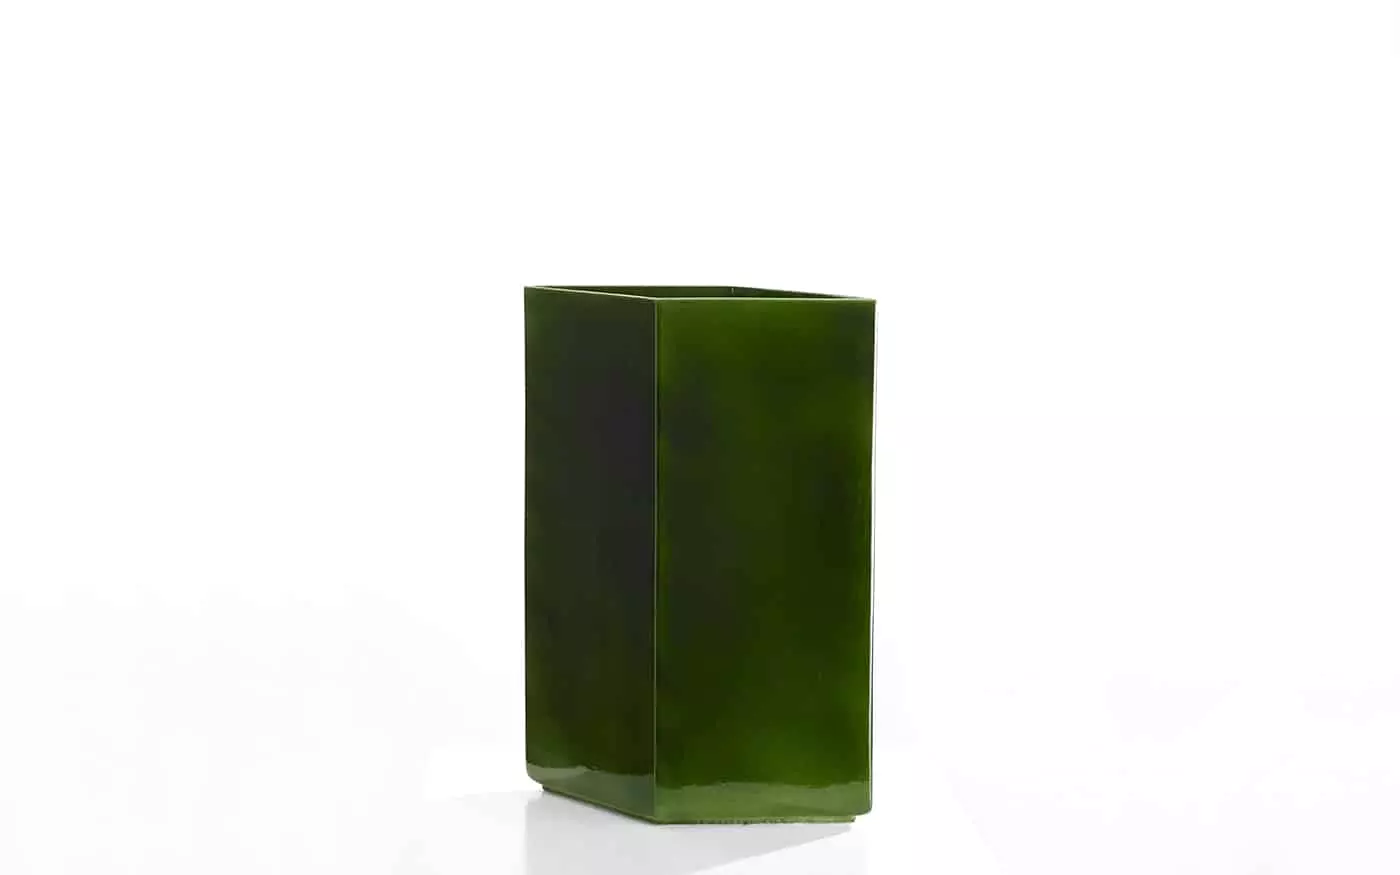 Vase Losange 67 green - Ronan & Erwan Bouroullec - Carpet - Galerie kreo